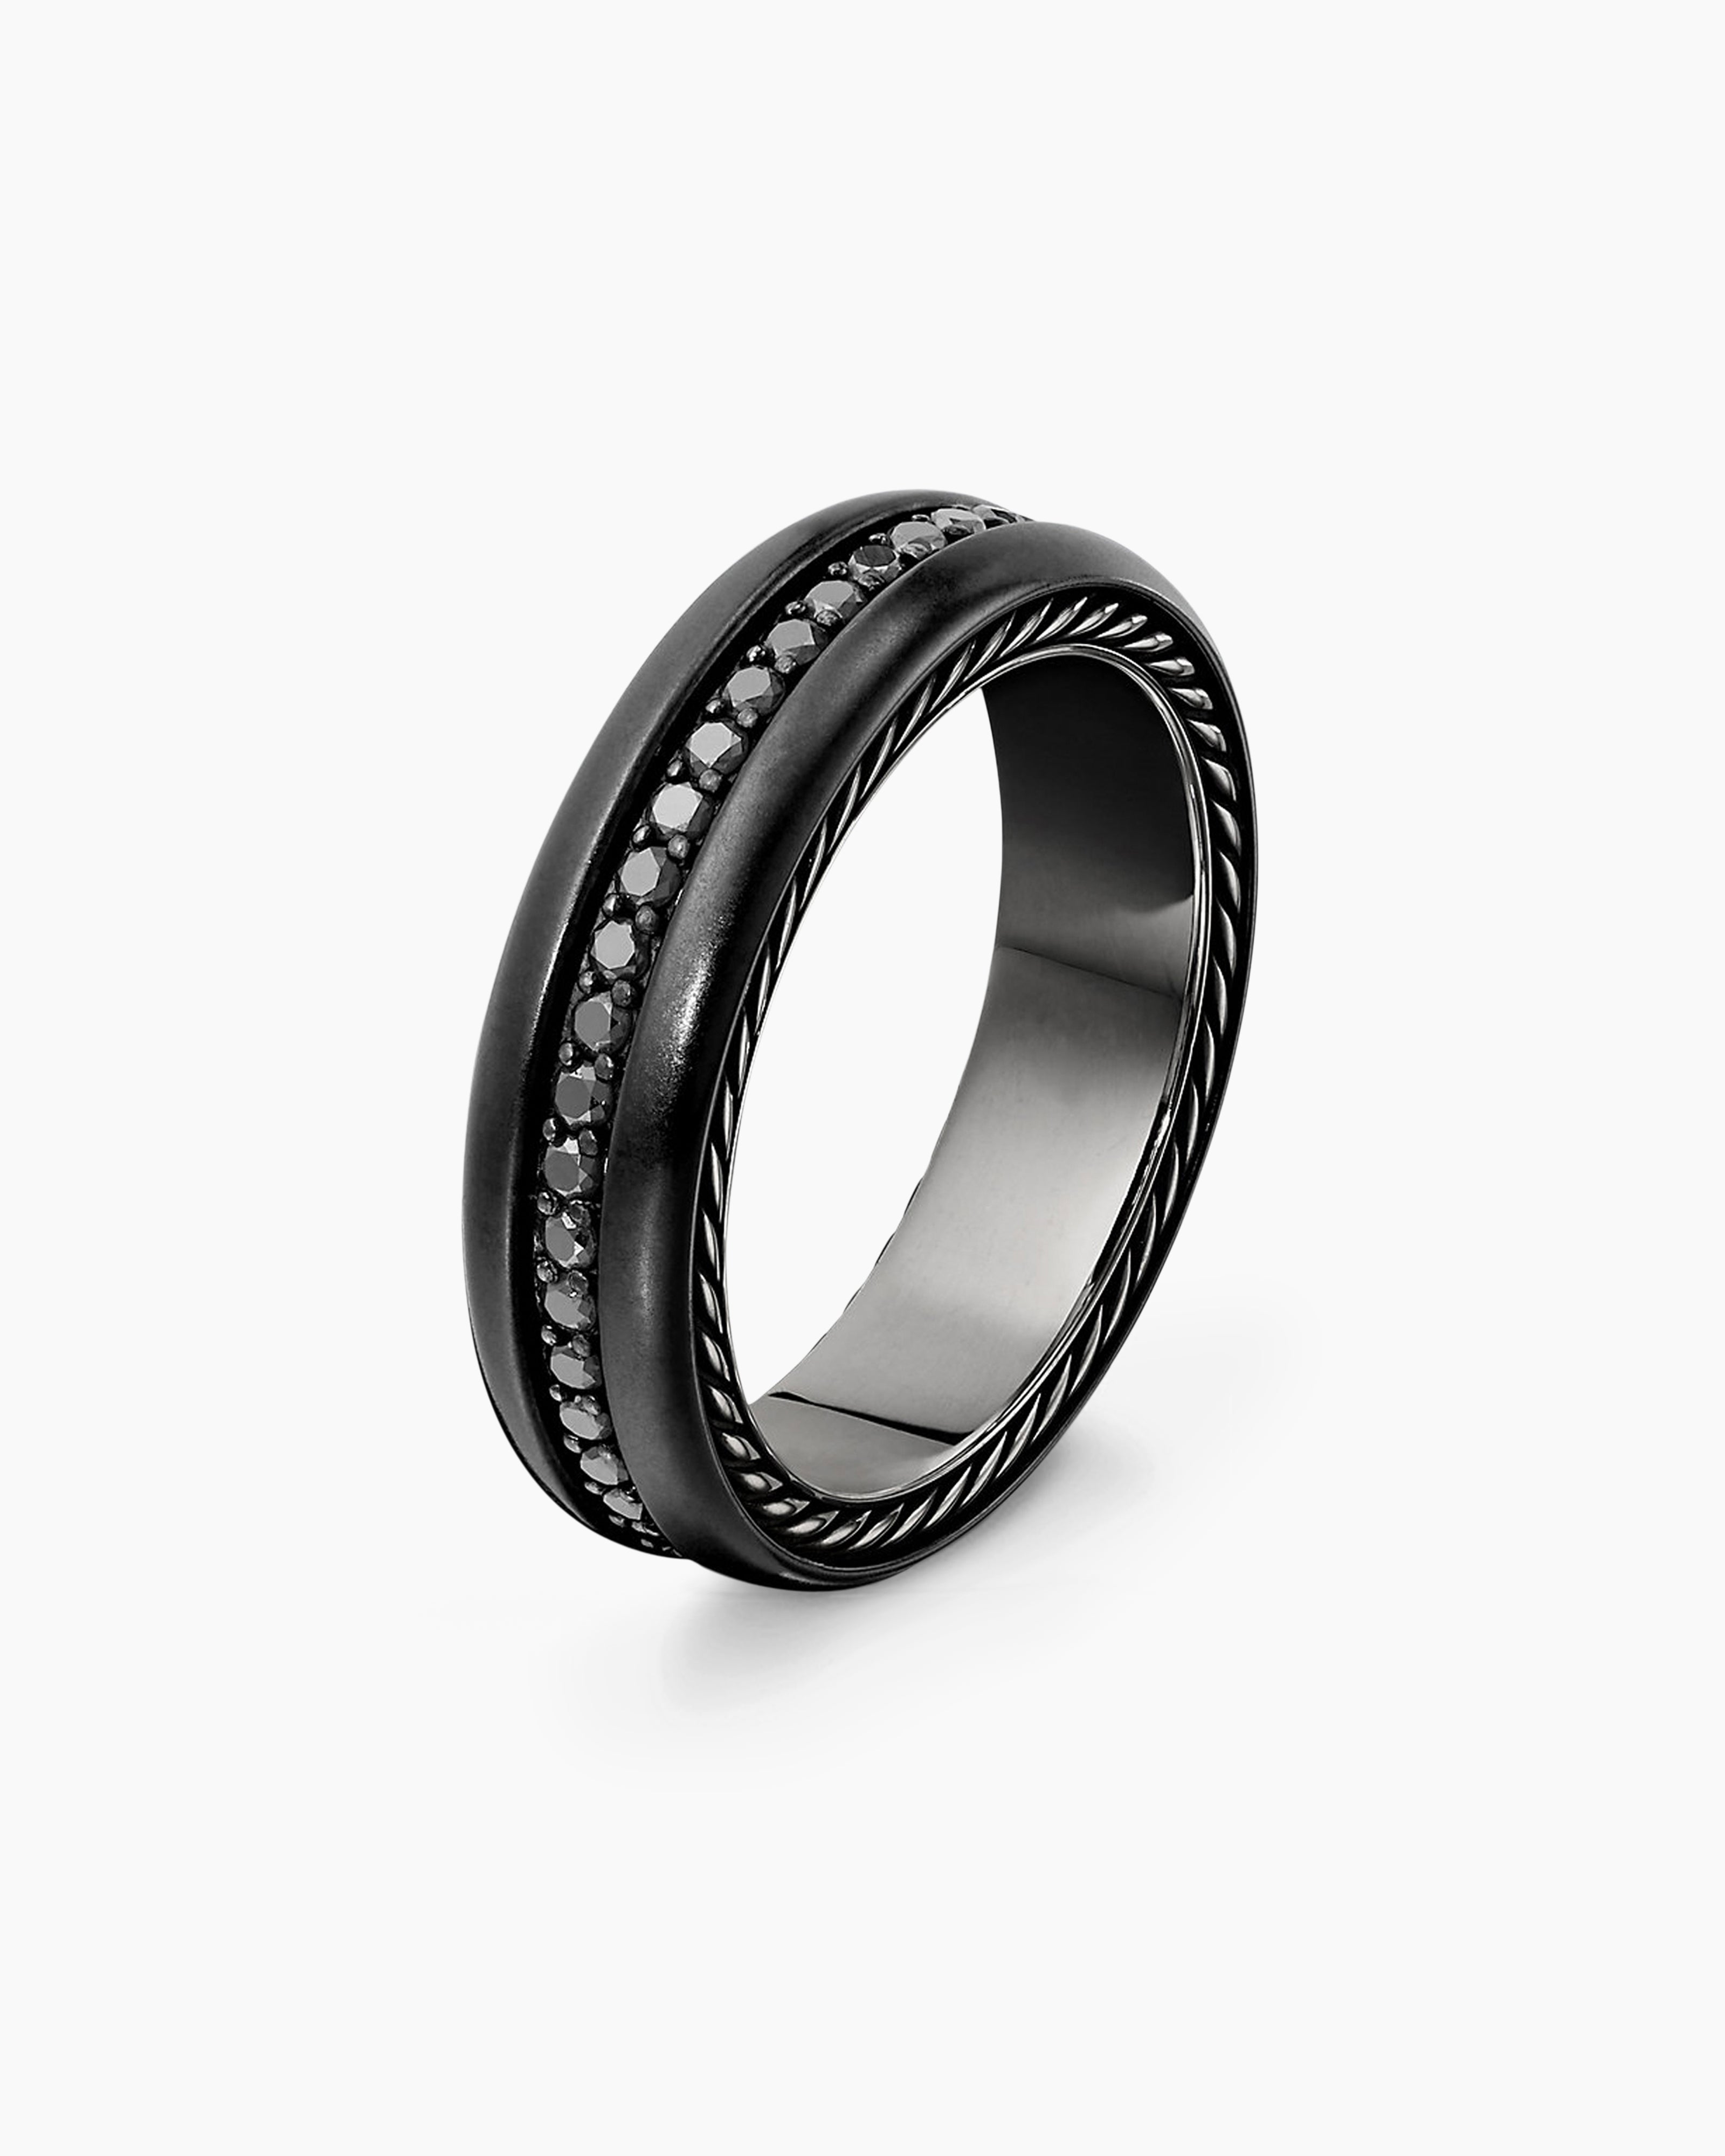 Buy Australian Titanium Rings Online - ETRNL